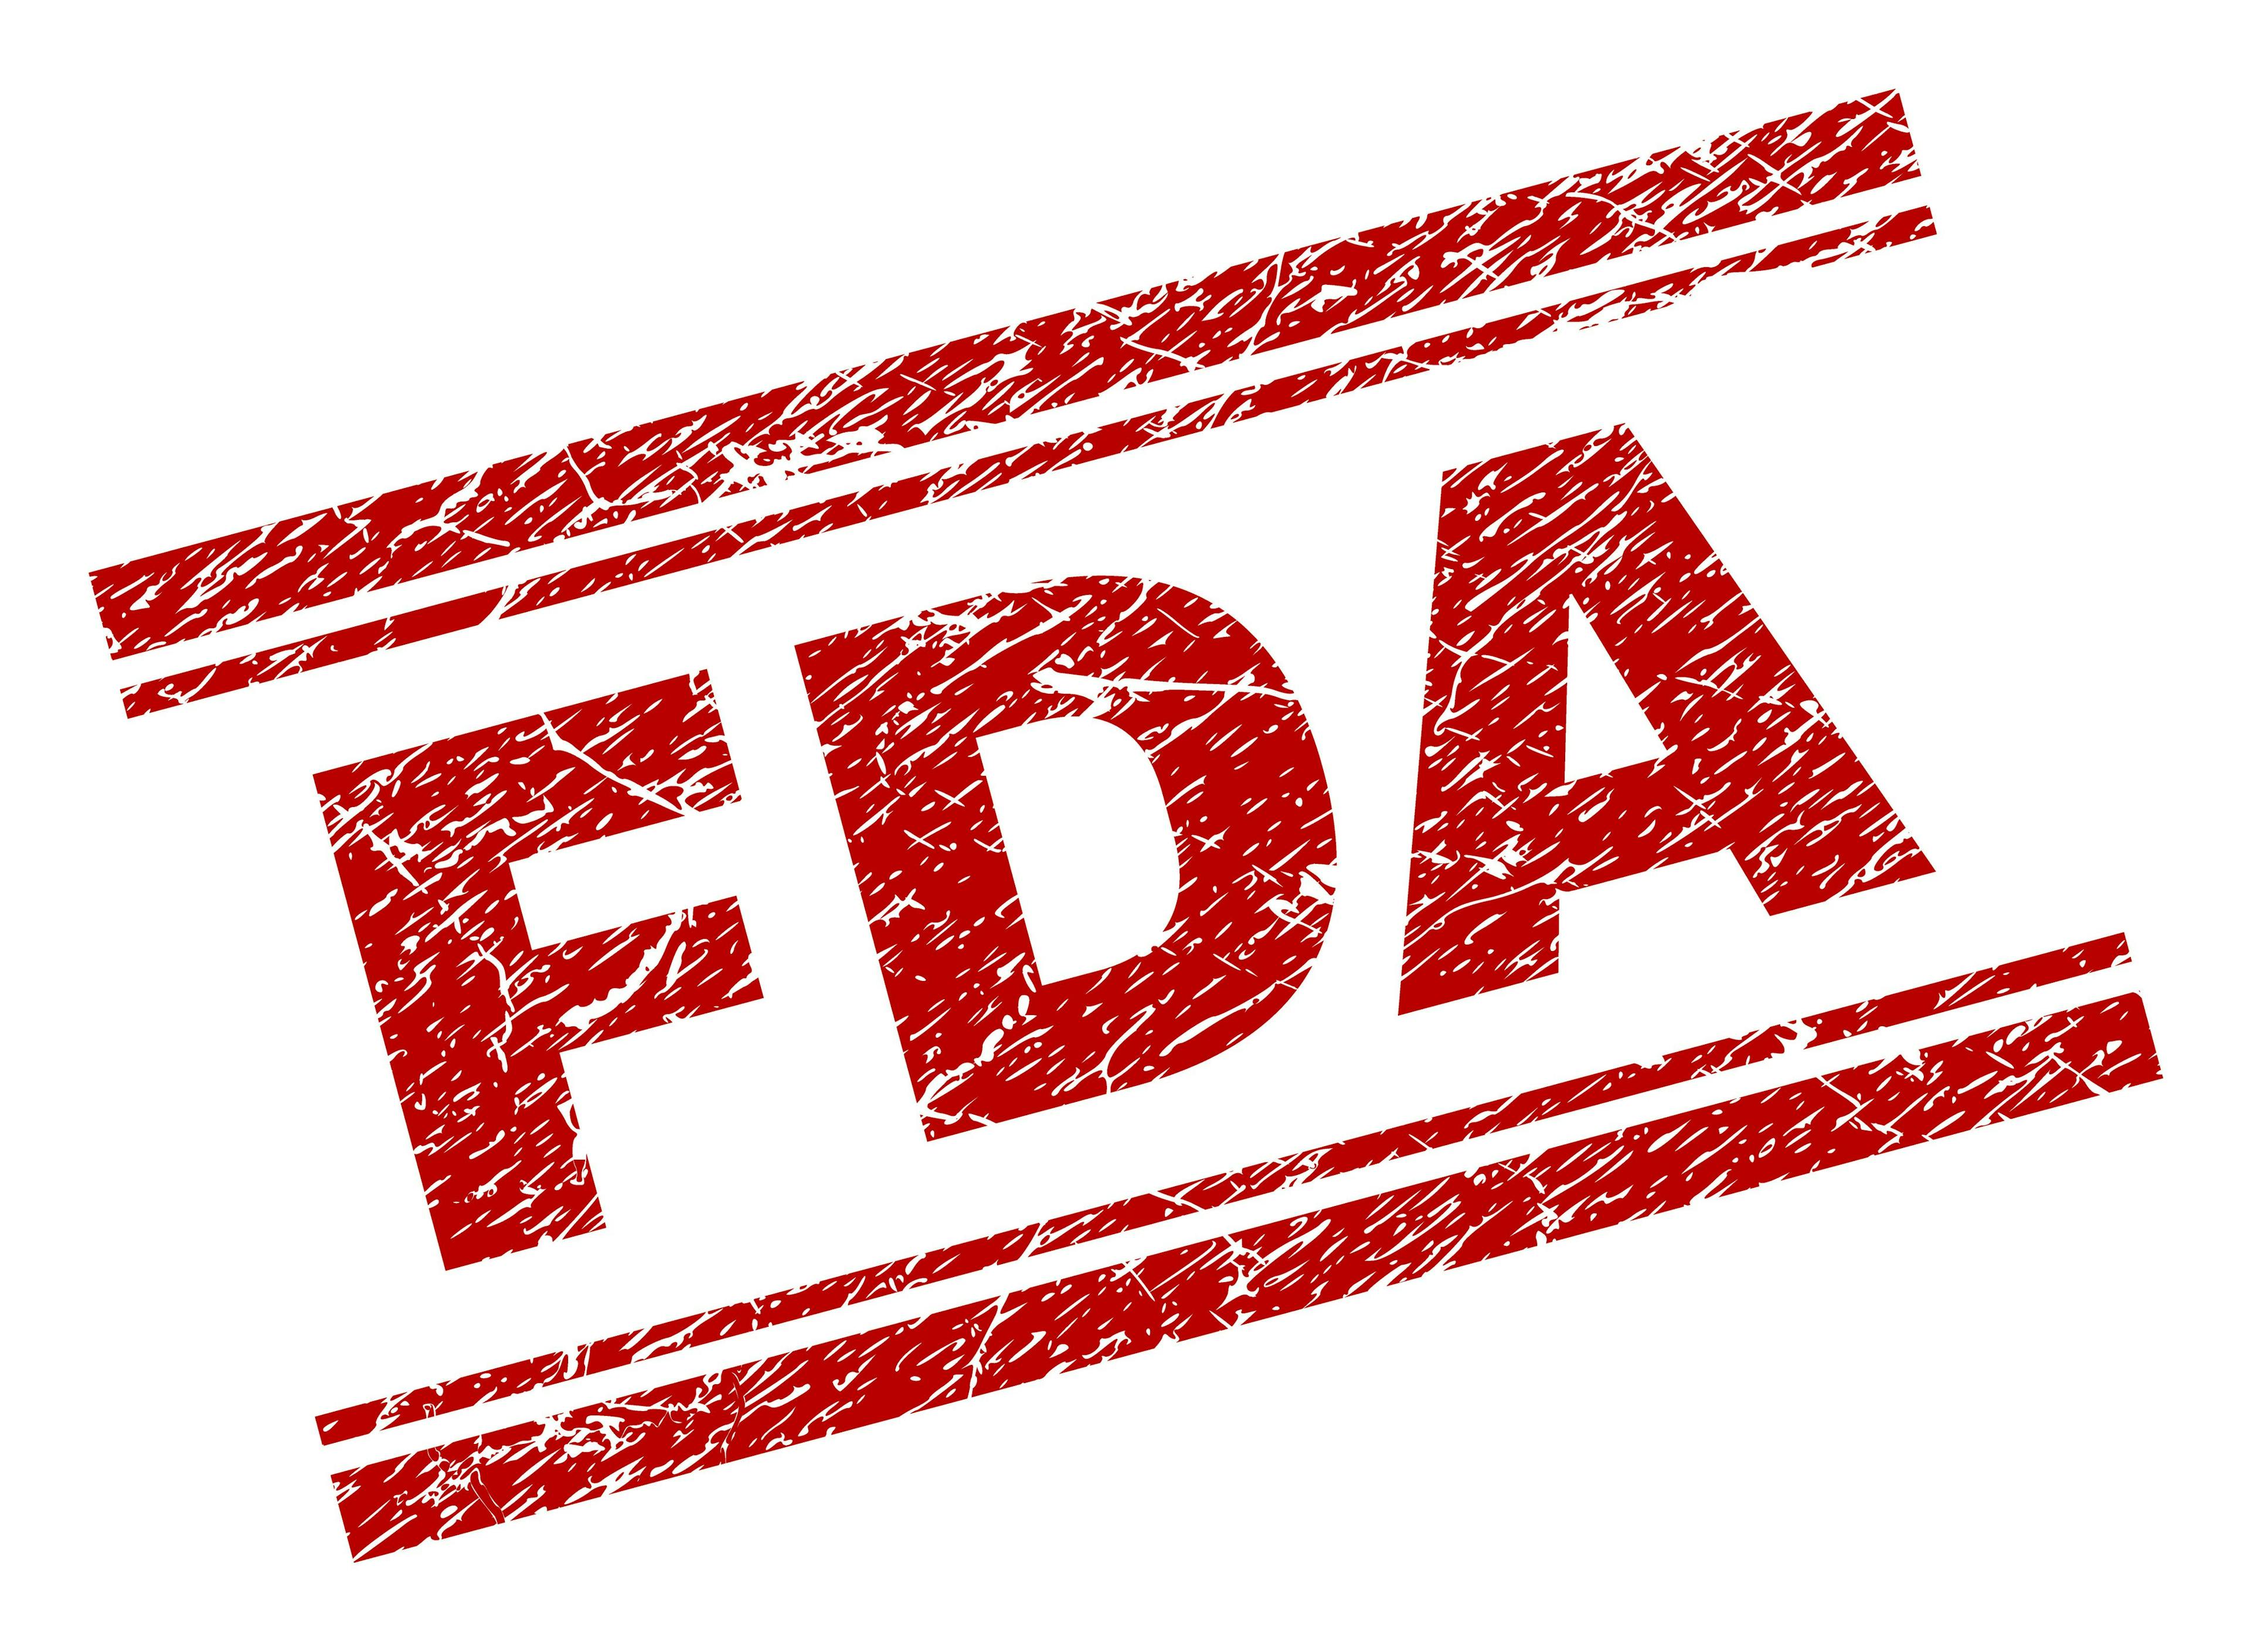 Verrica Pharmaceuticals Receives Response from the FDA